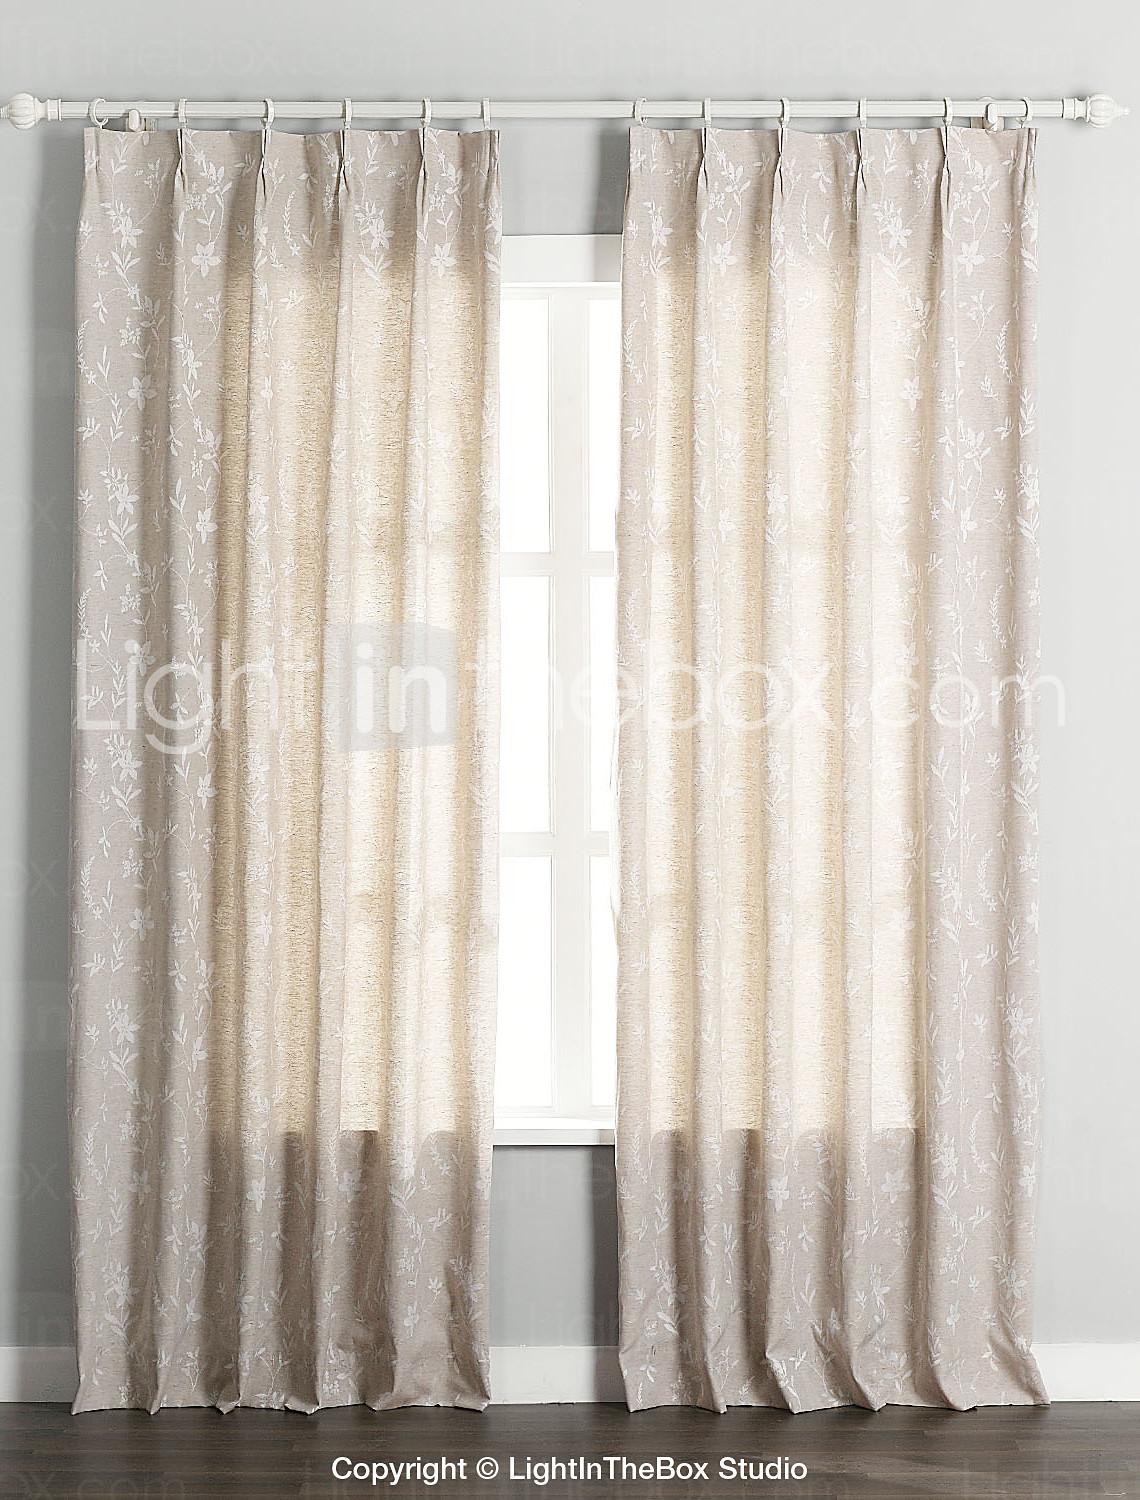 Foto (Dos paneles) flores de lino / algodón de color beige cortinas ecológicos